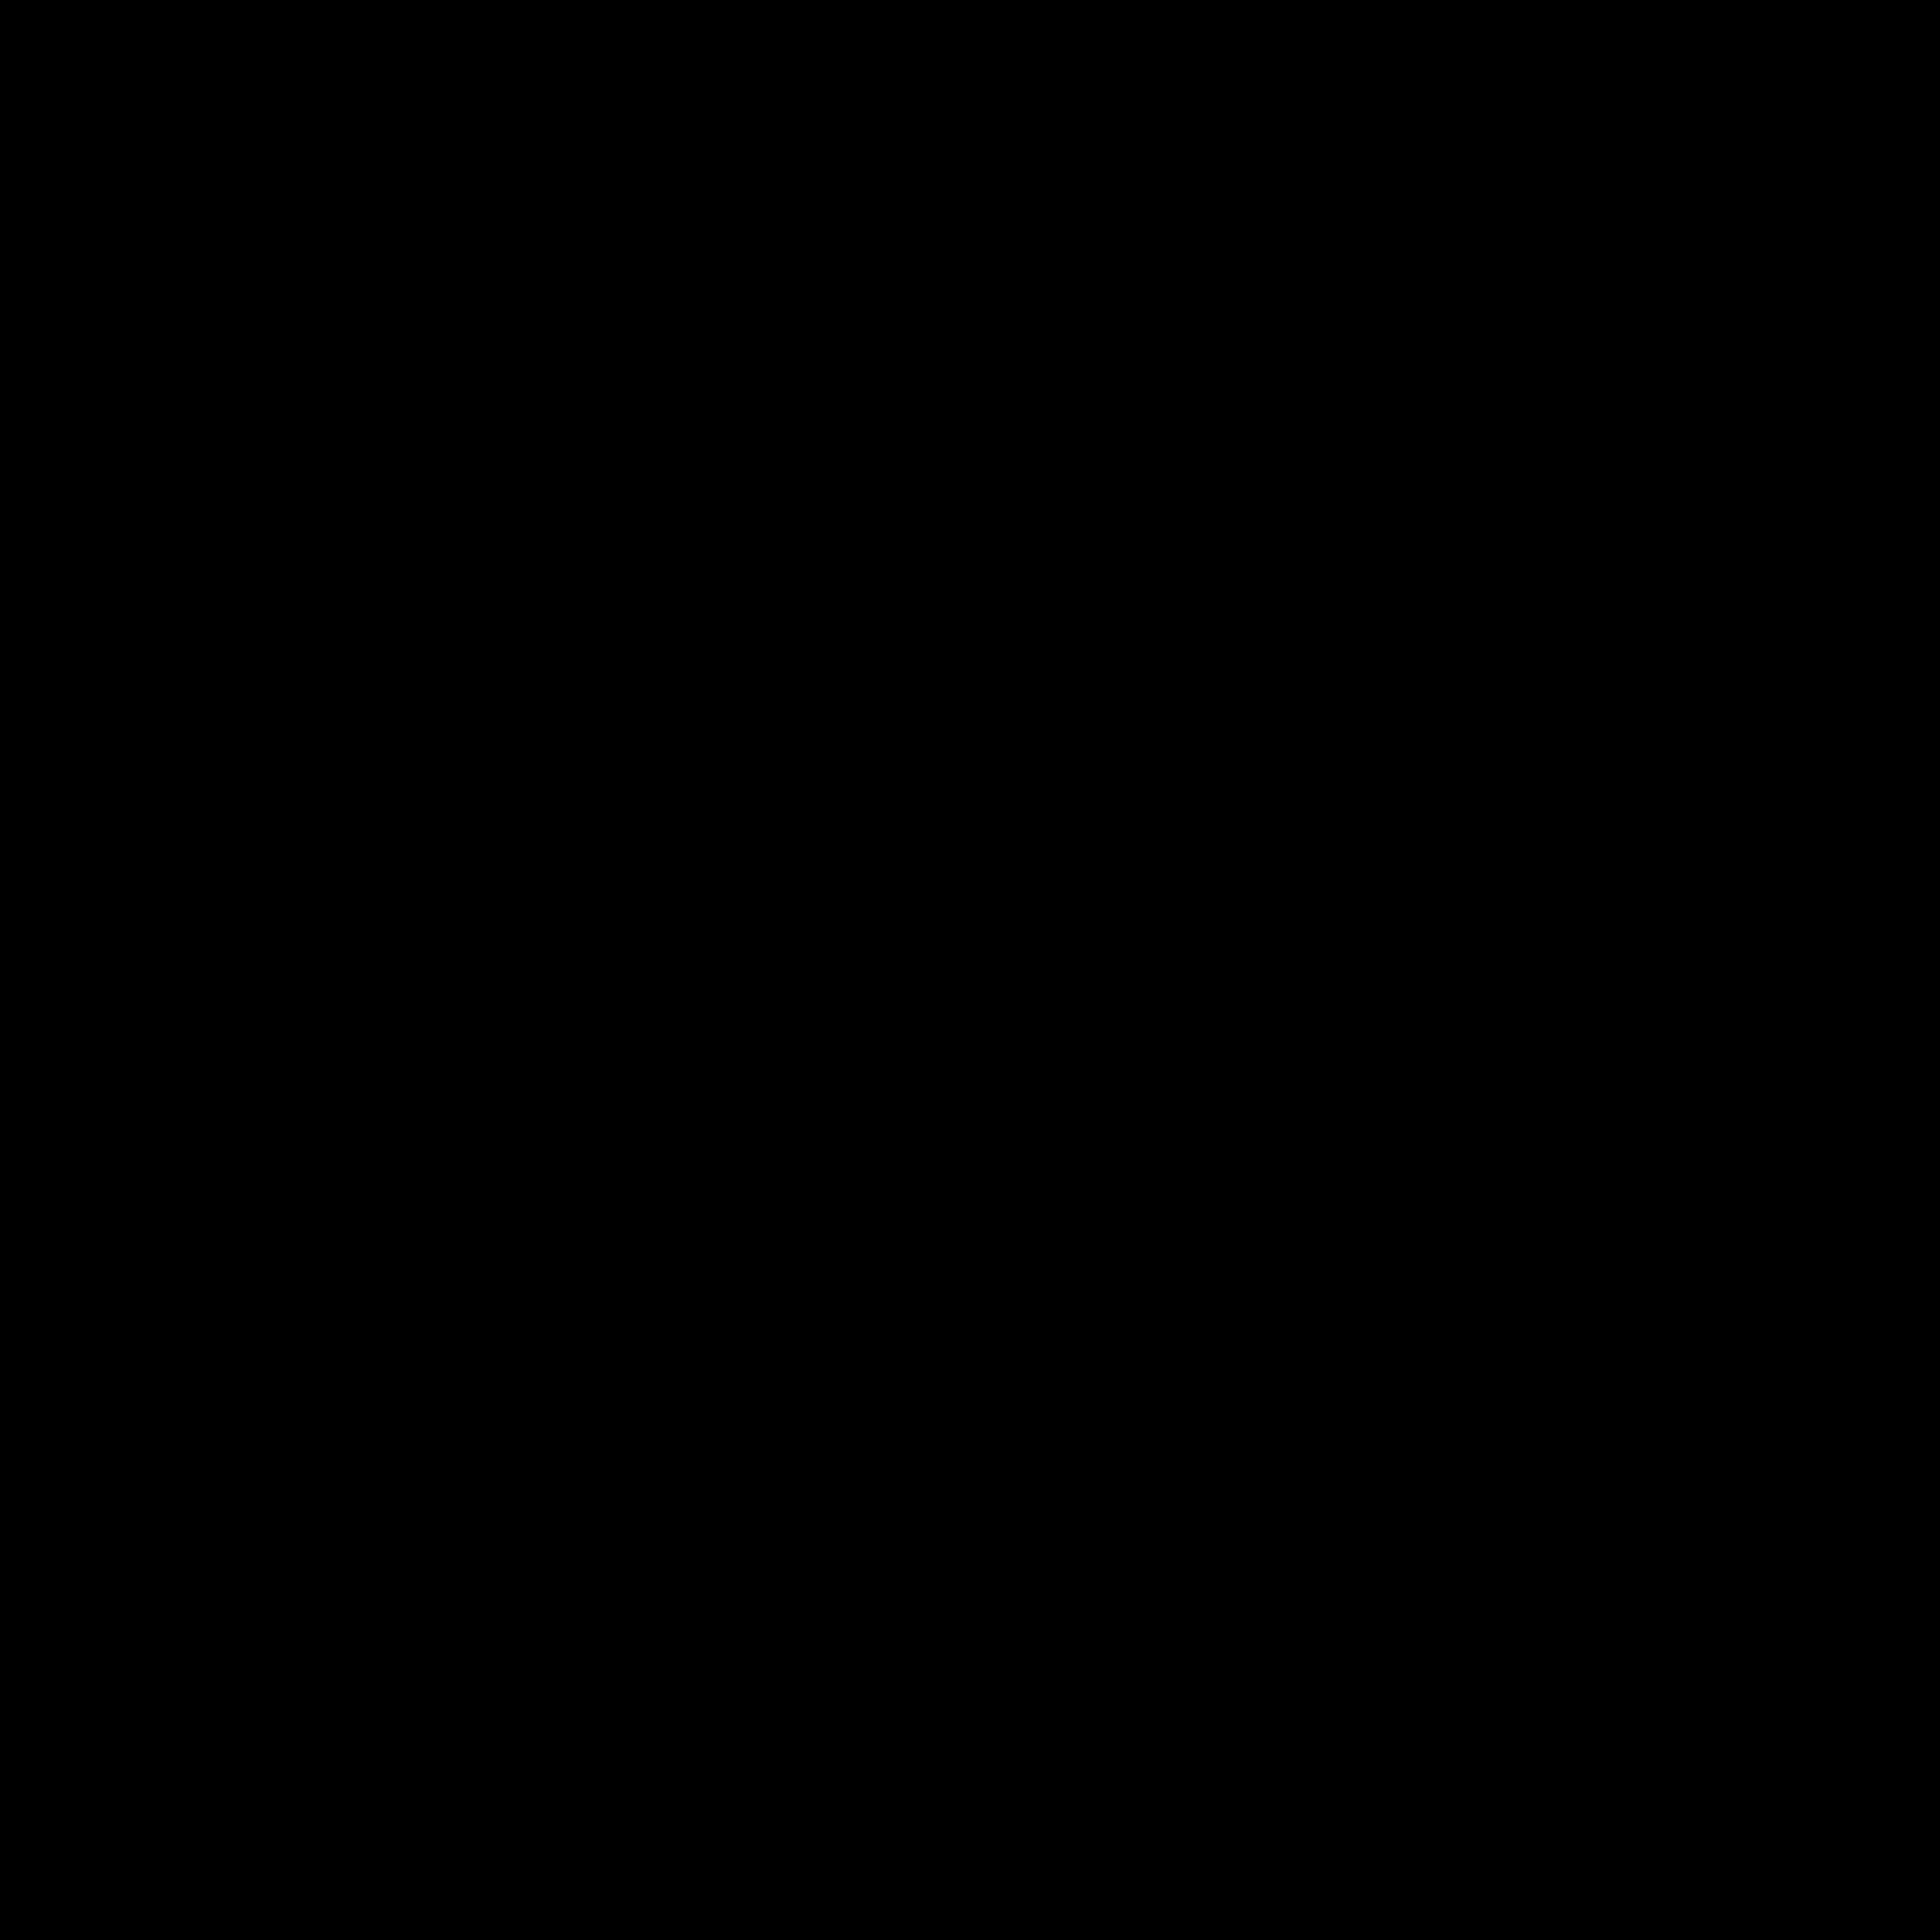 The official logo of RNJ ELITe